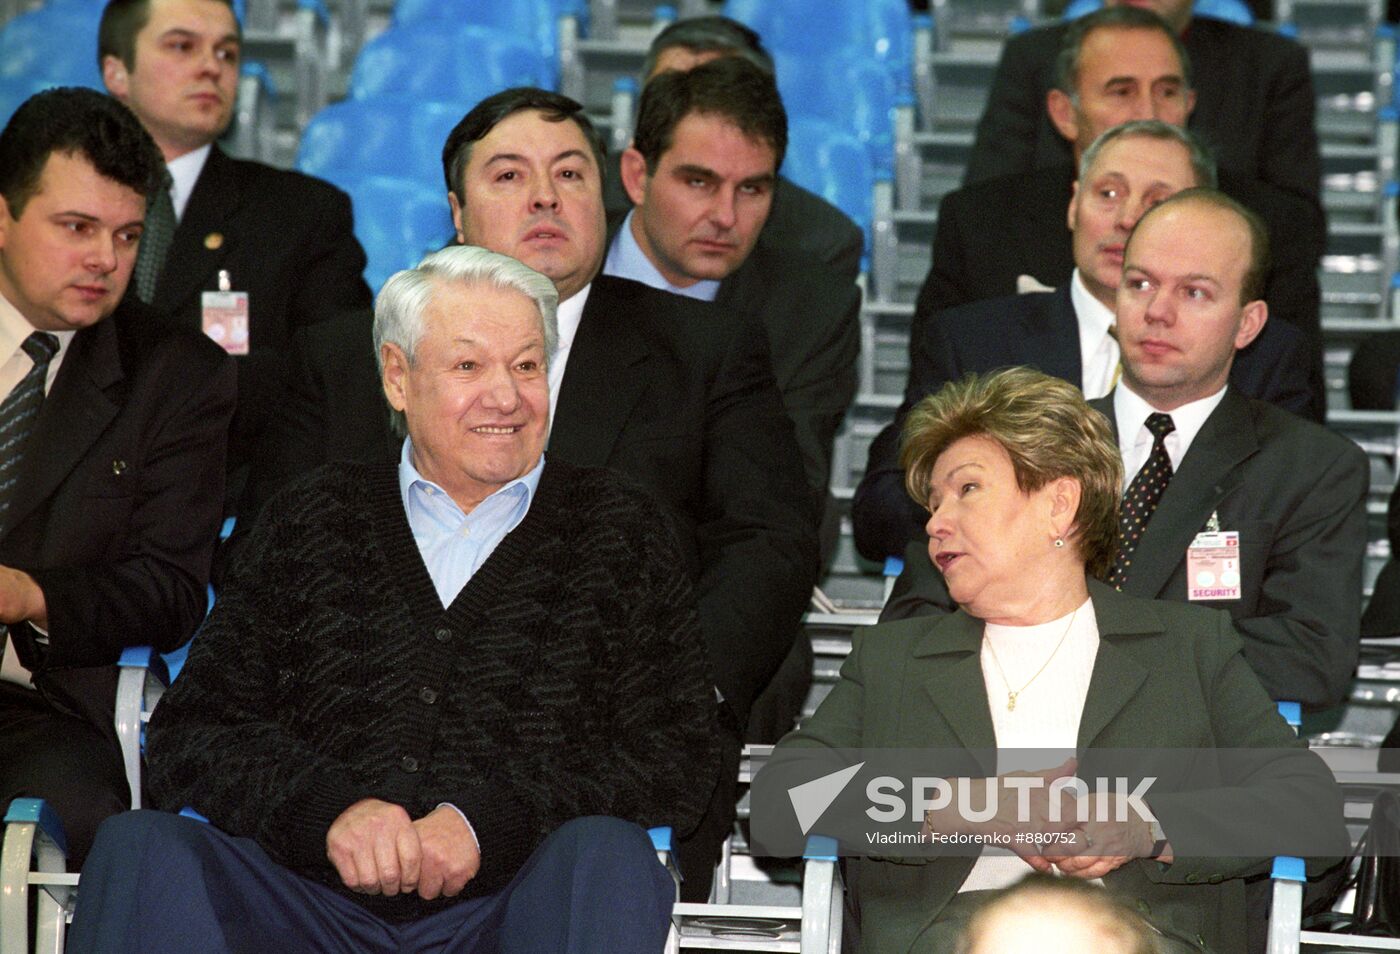 Boris and Yeltsins